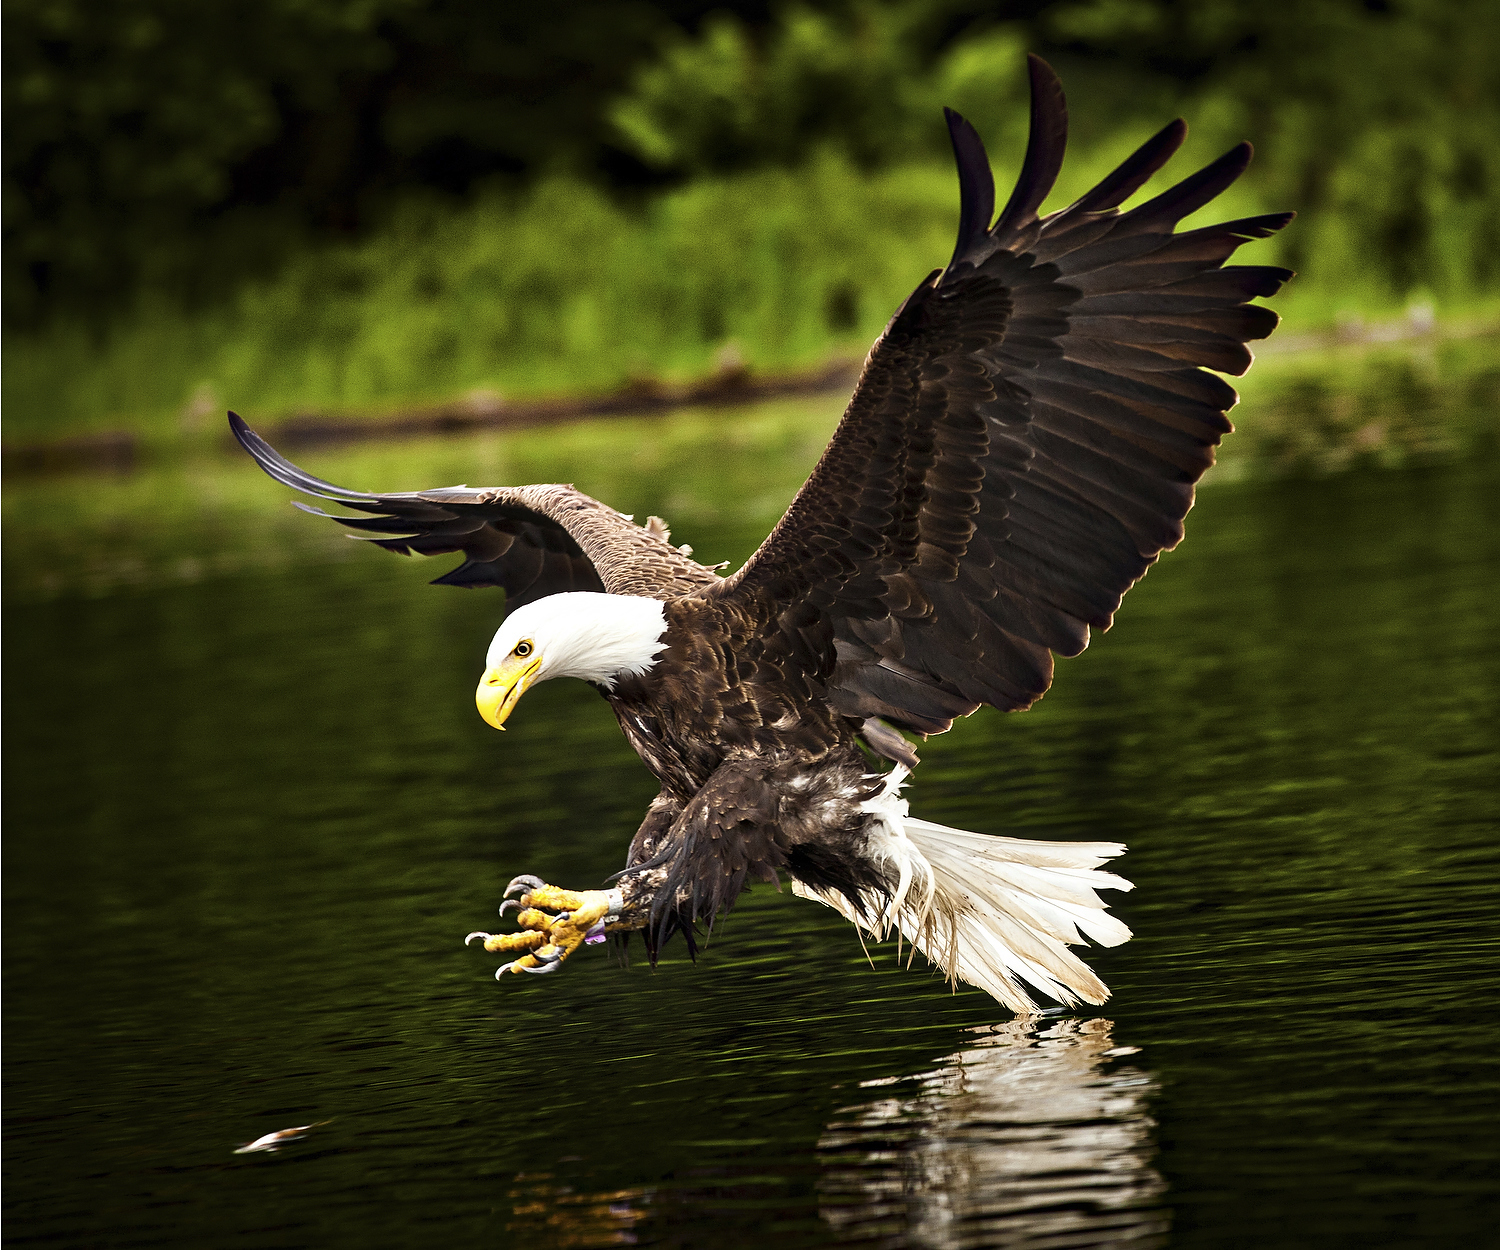  American bald eagle (Haliaeetus leucocephalus) in flight with fish Boulder Junction, Wisconsin. 